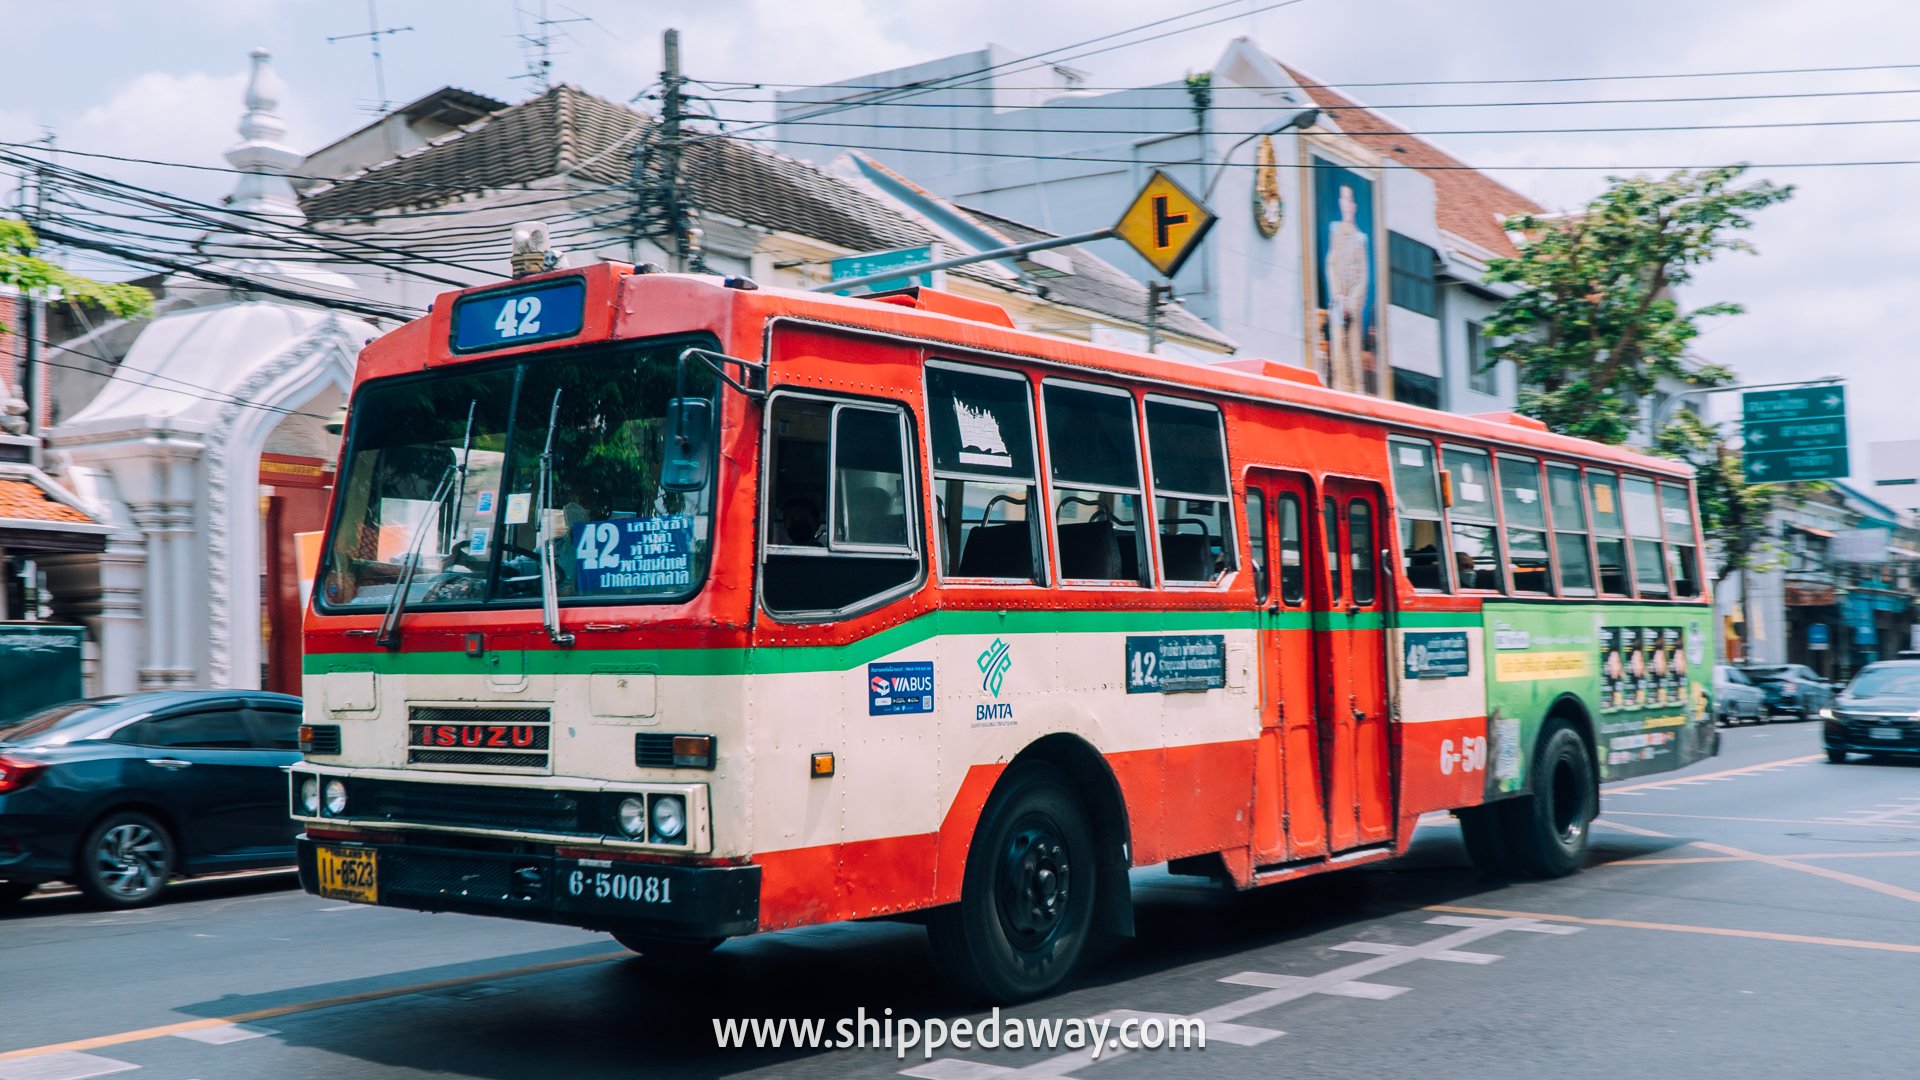 Local bus transportation around Bangkok, Thailand